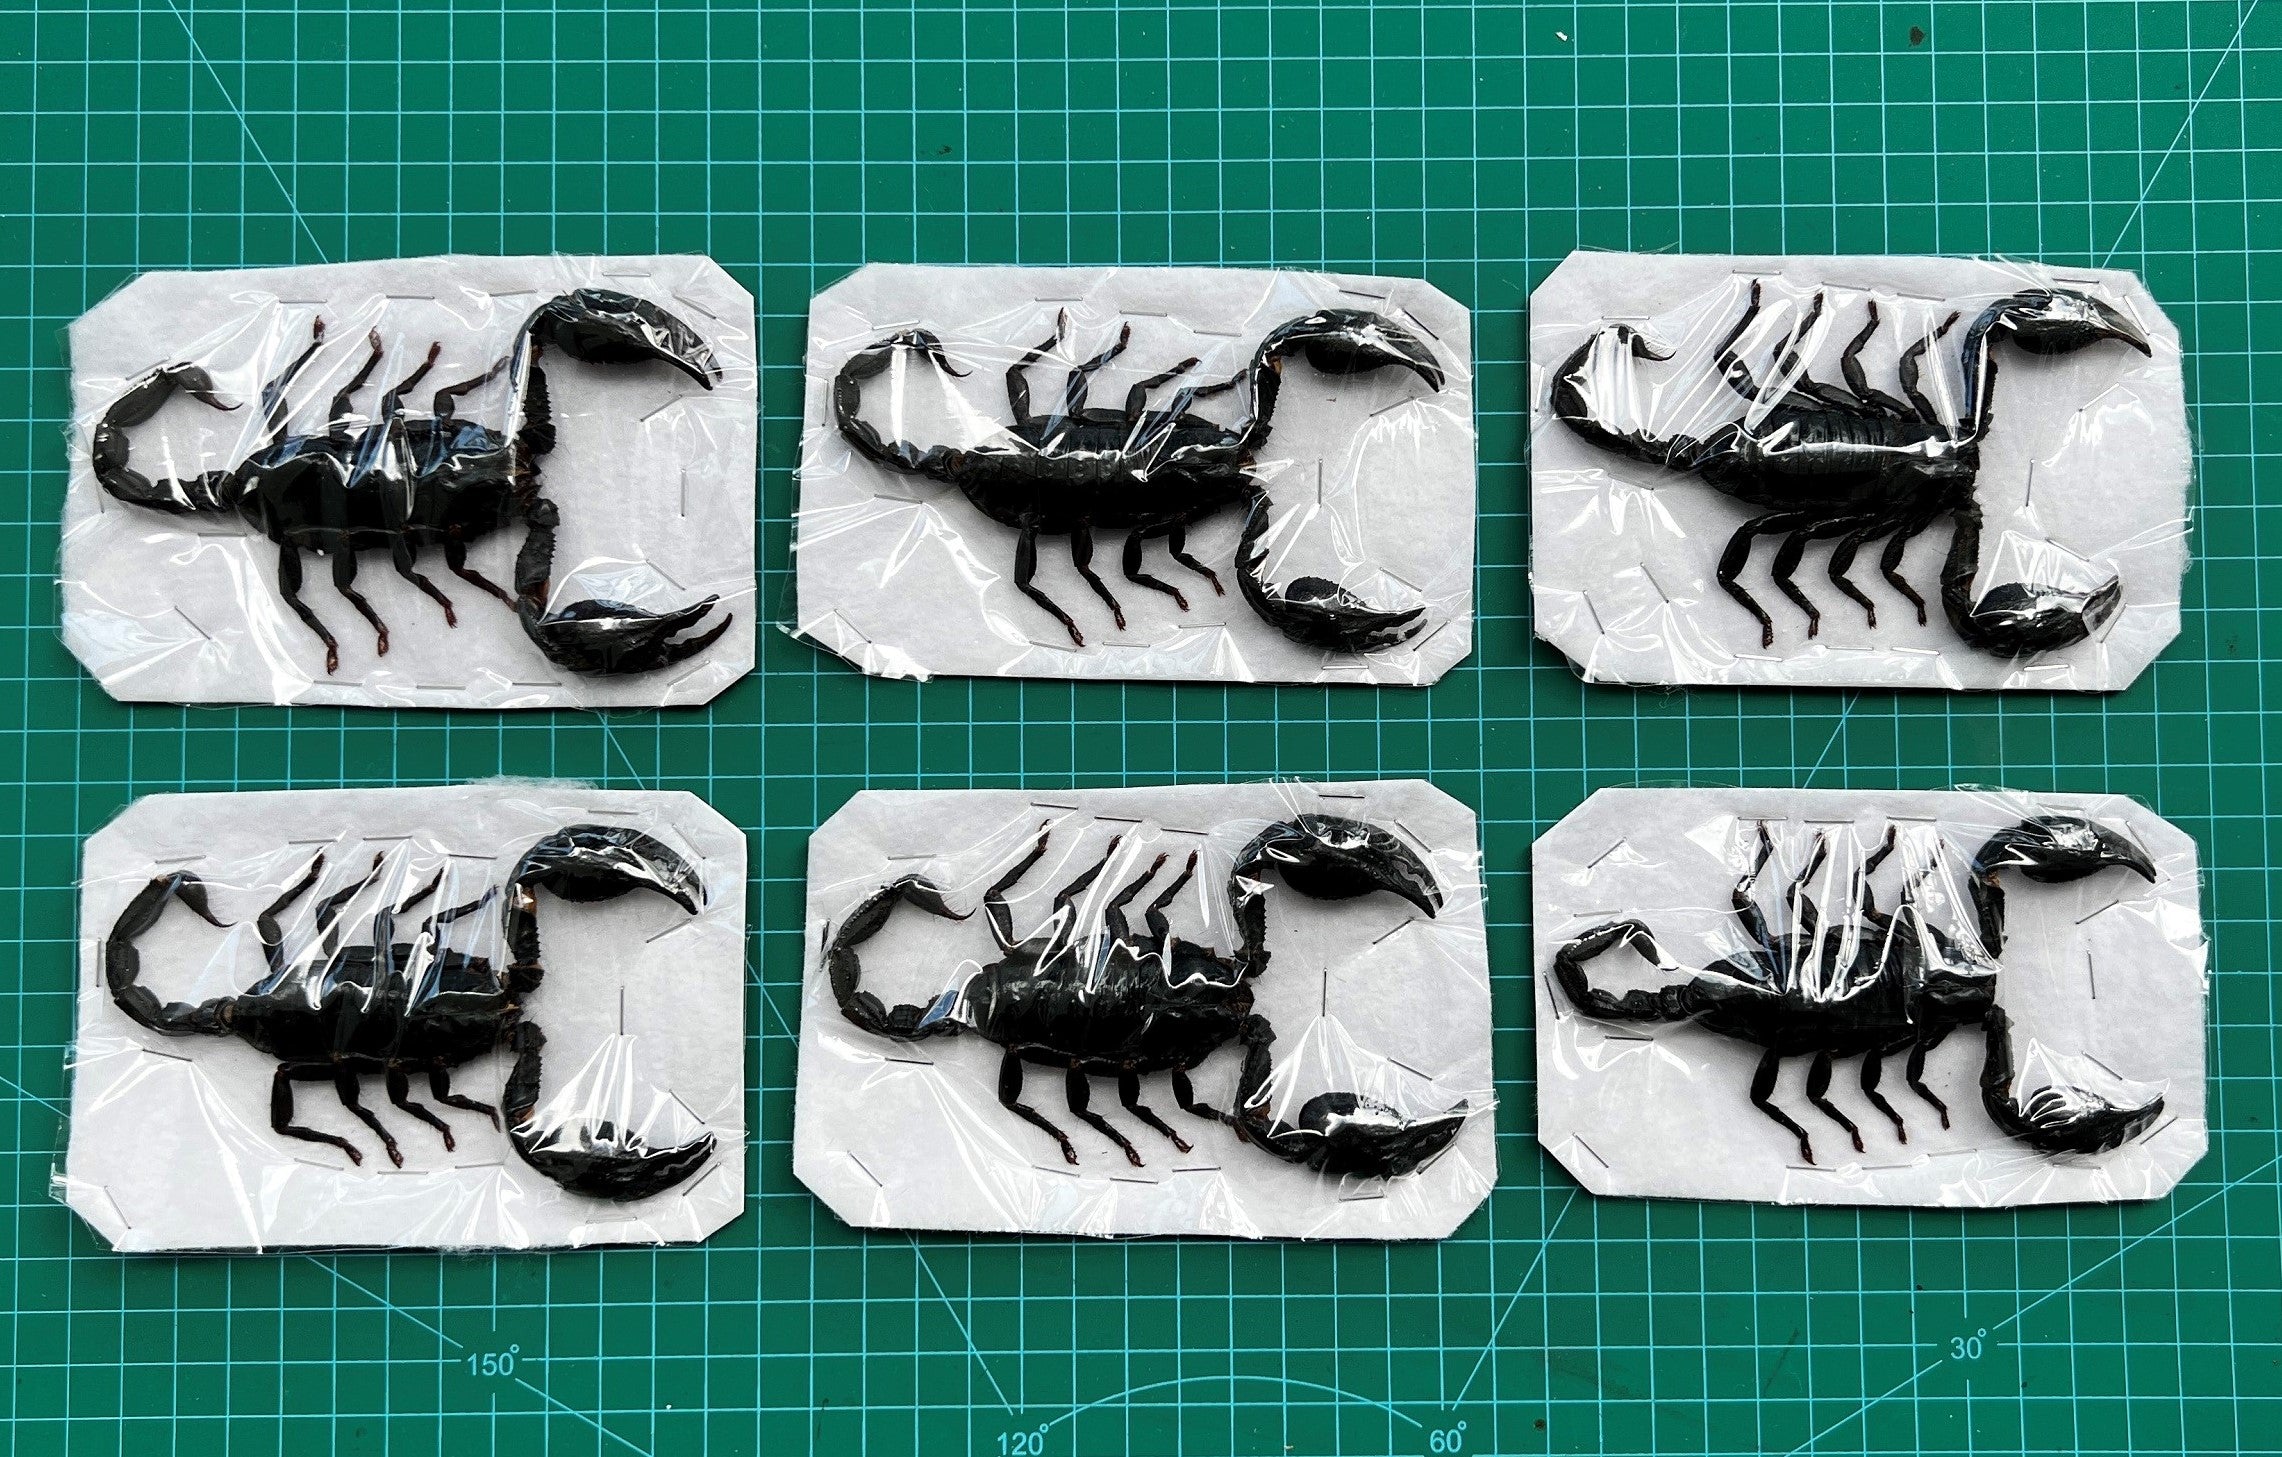 6 Real Giant Scorpion 7” Large Insect Bug Entomology Specimen Taxidermy Oddity Taxadermy UM11